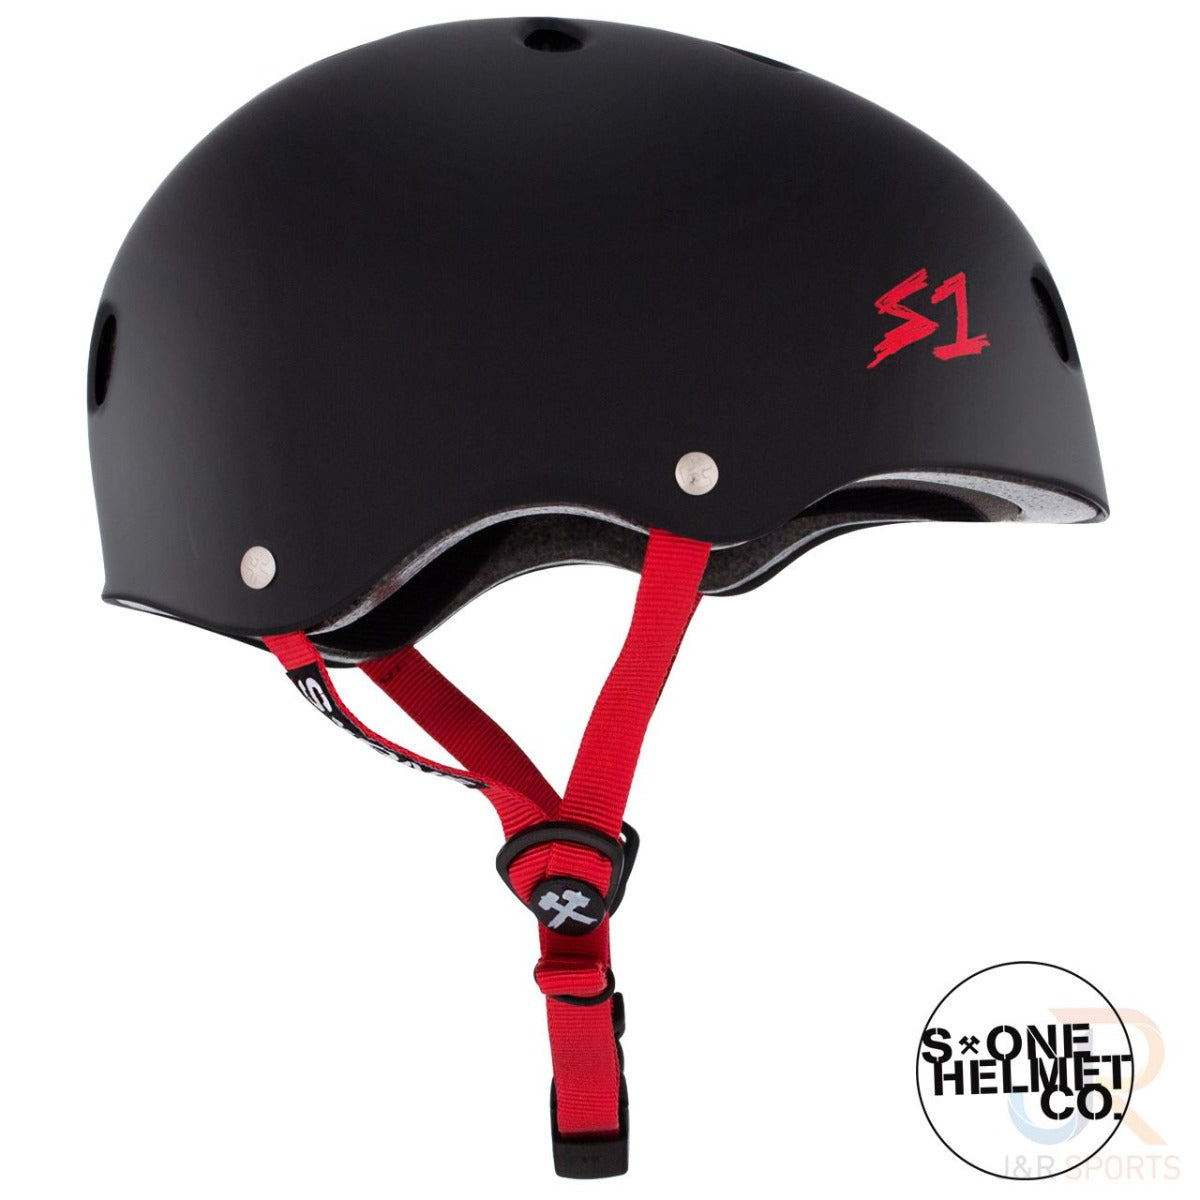 S1 Lifer Skate / Scooter Helmet - Matt Black / Red - Right